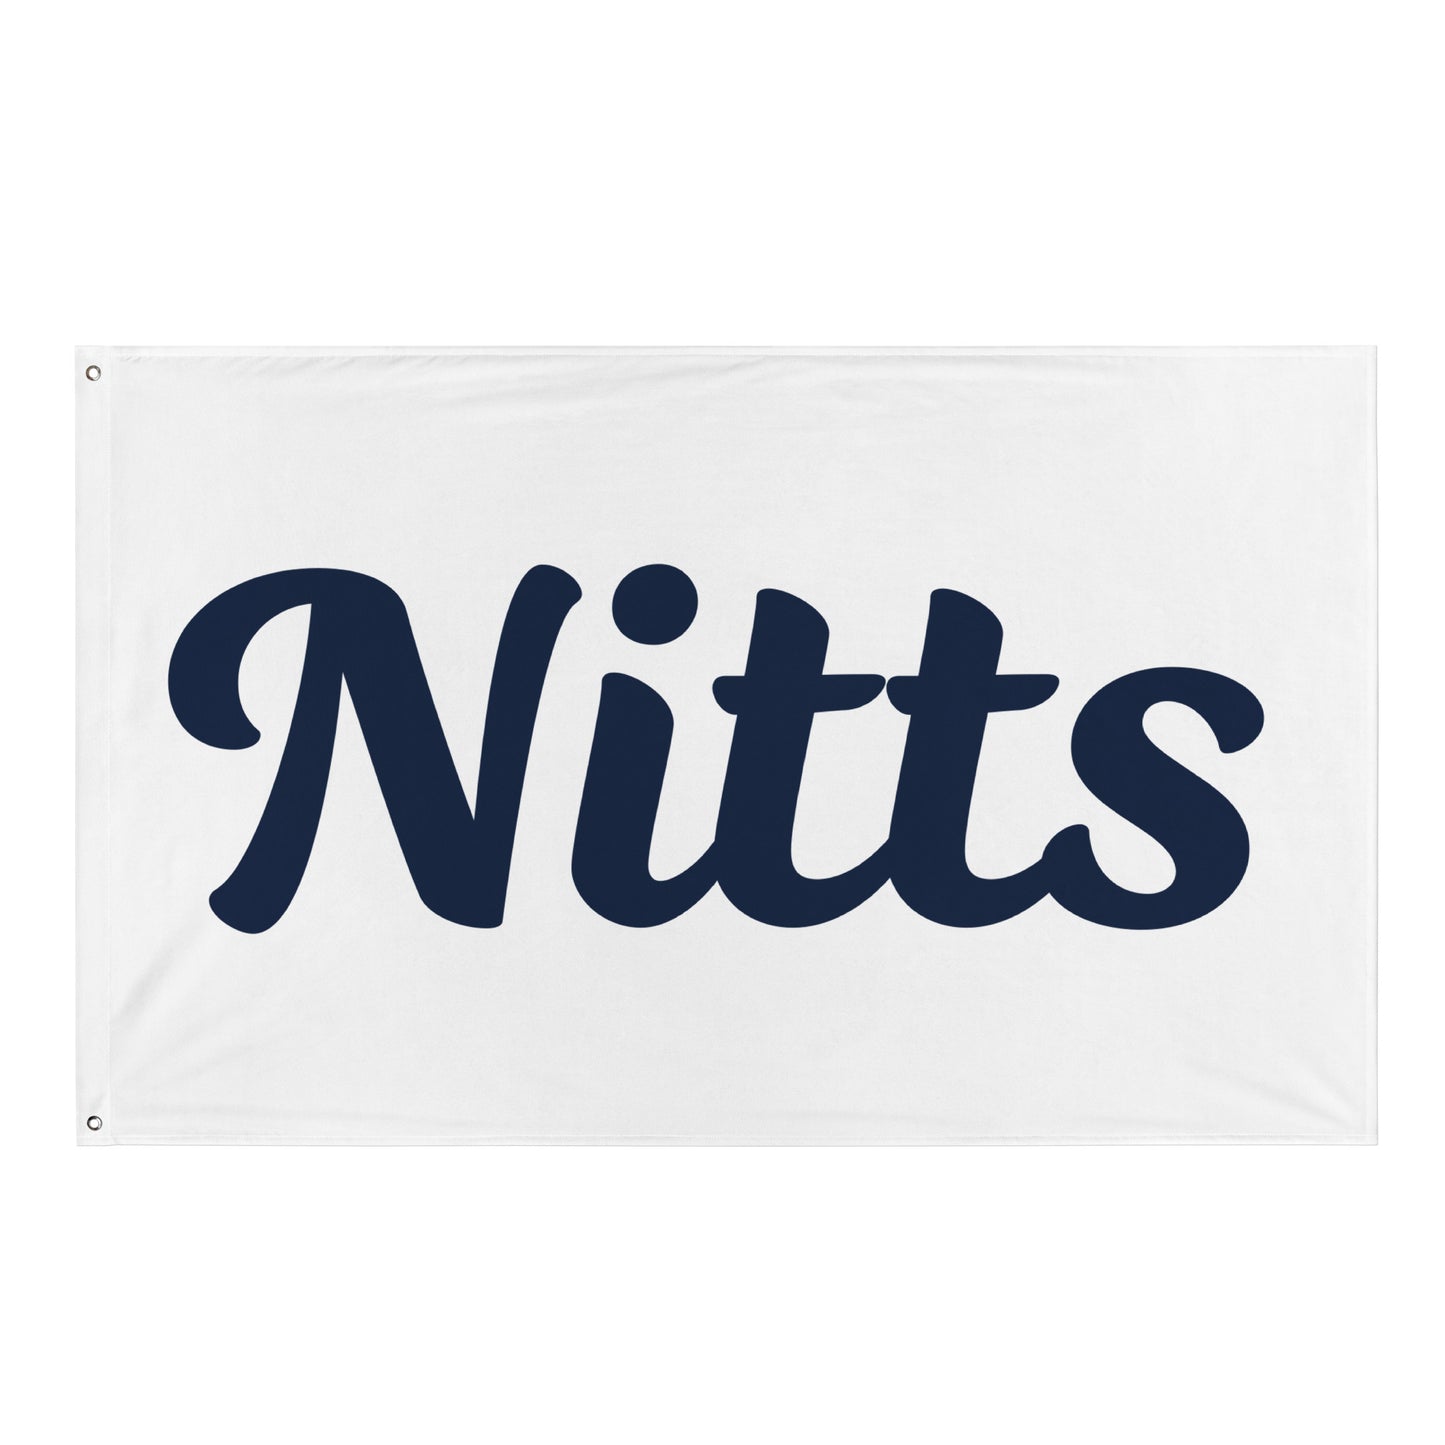 Nitts Classic tailgate flag